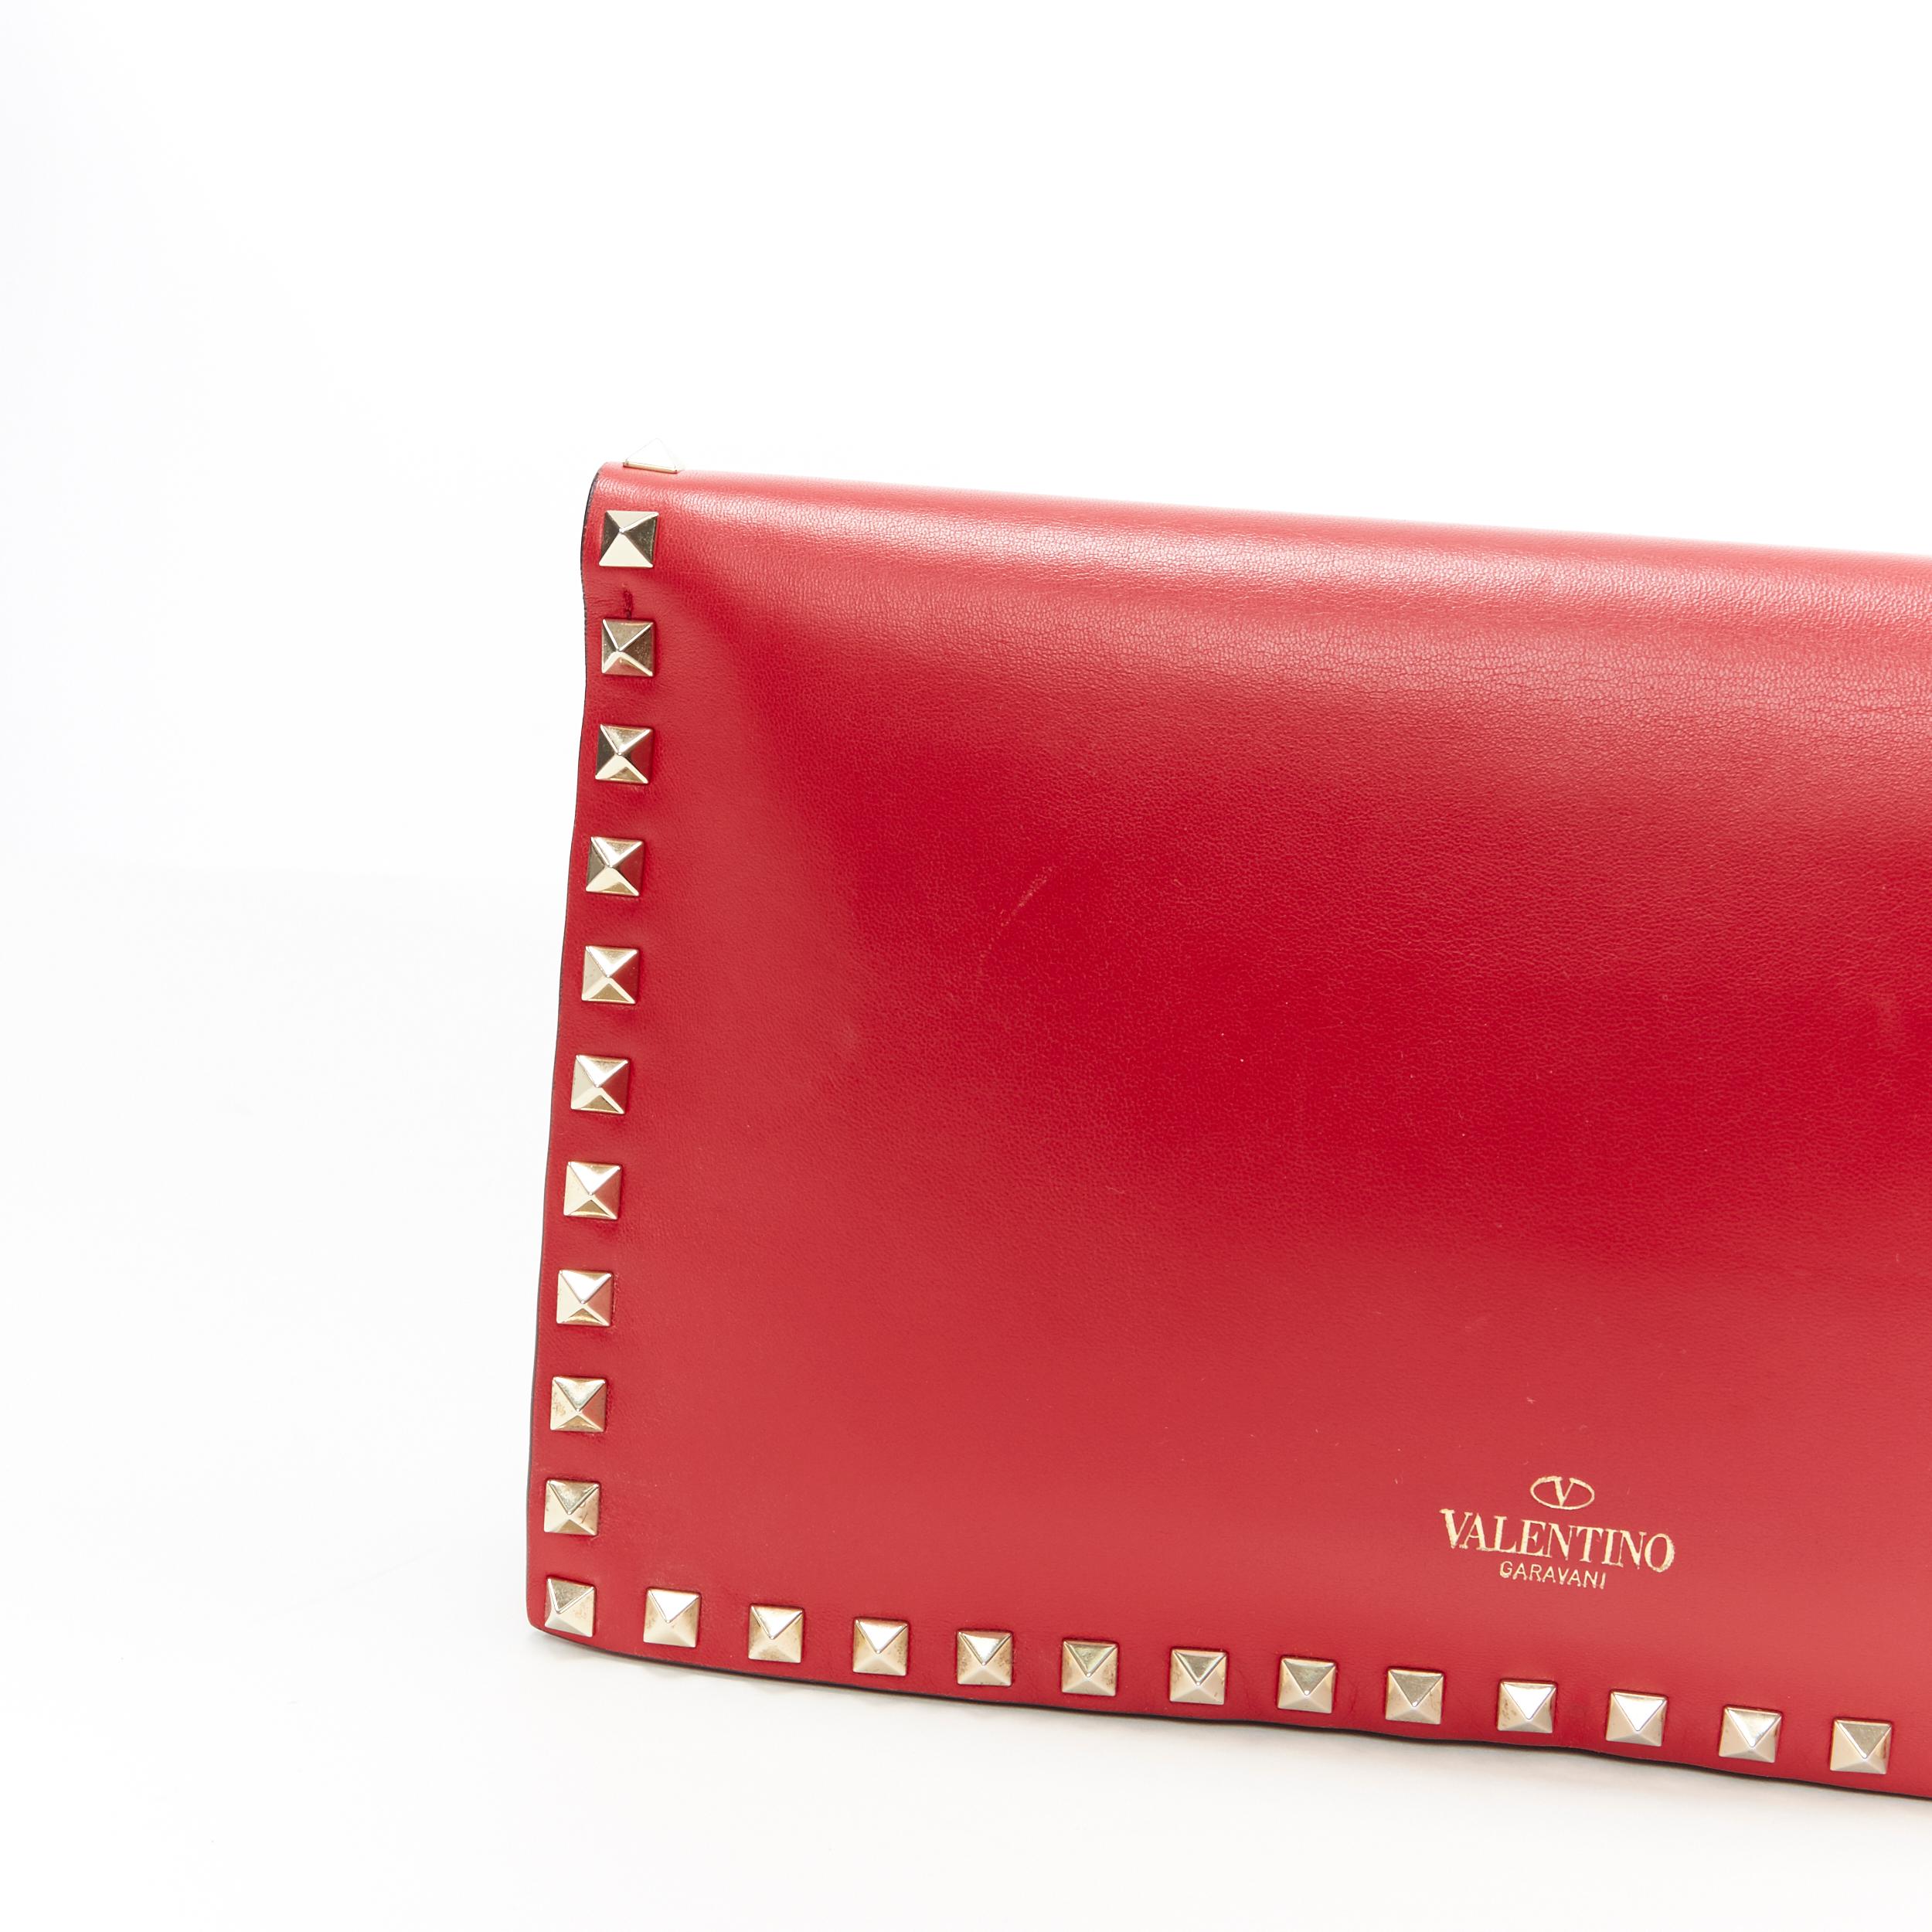 VALENTINO Rockstud red leather gold studded bordered wristlet flap clutch bag 1